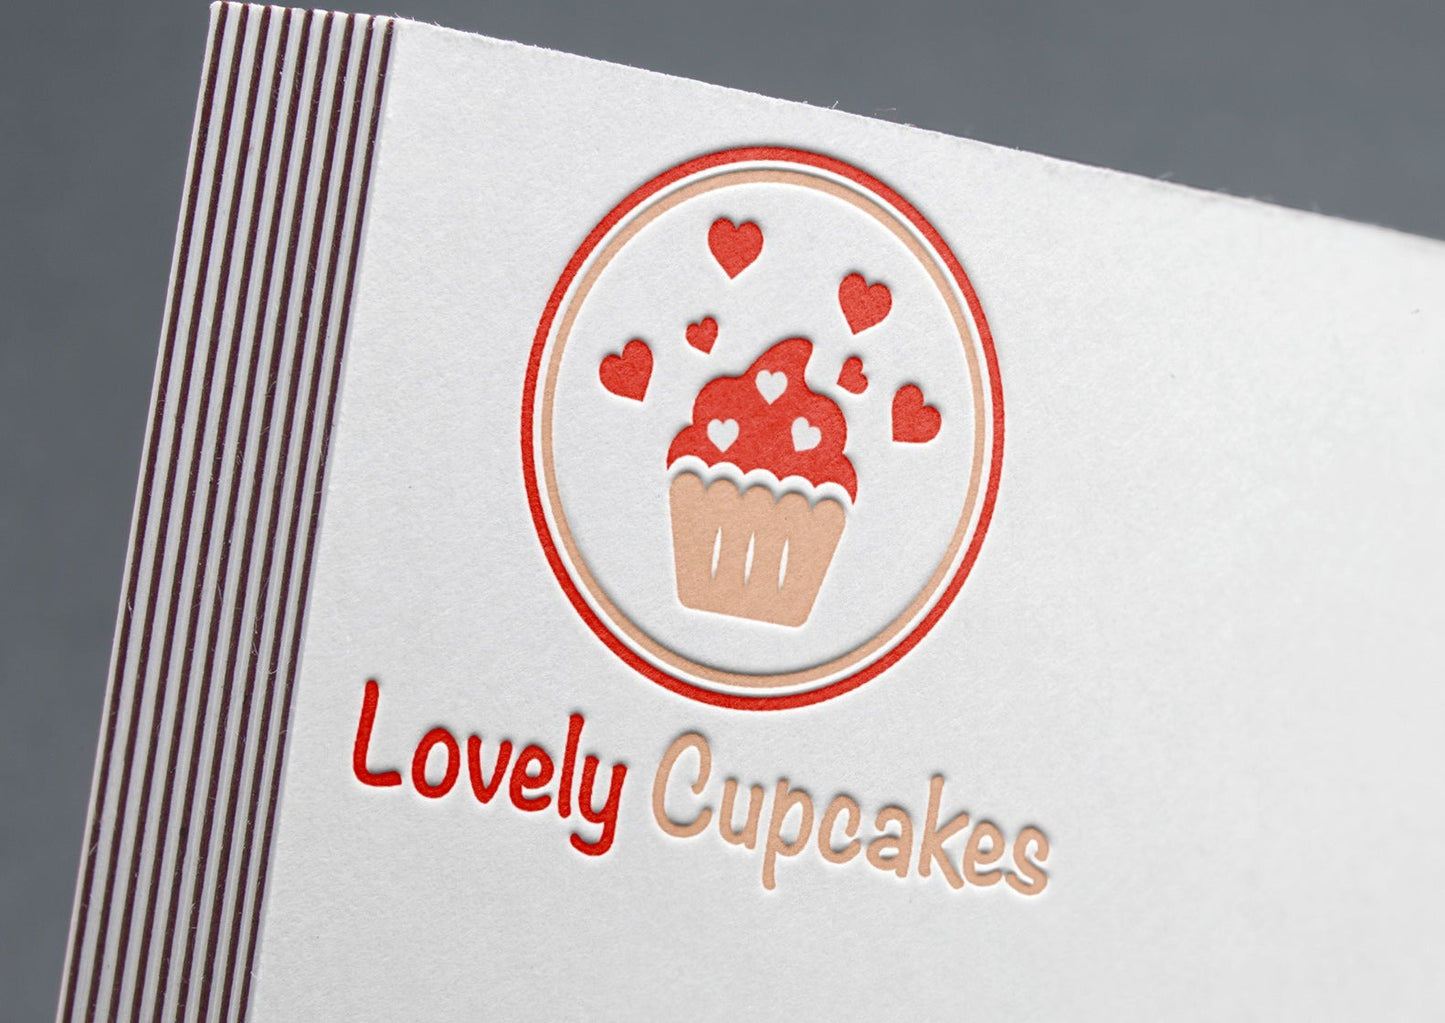 Cupcake Logo Design | Heart Design | Bakery Logo | Bakery Shop | Pastry Shop | Cupcake Design | Bakery | Pastries | Cake Logo